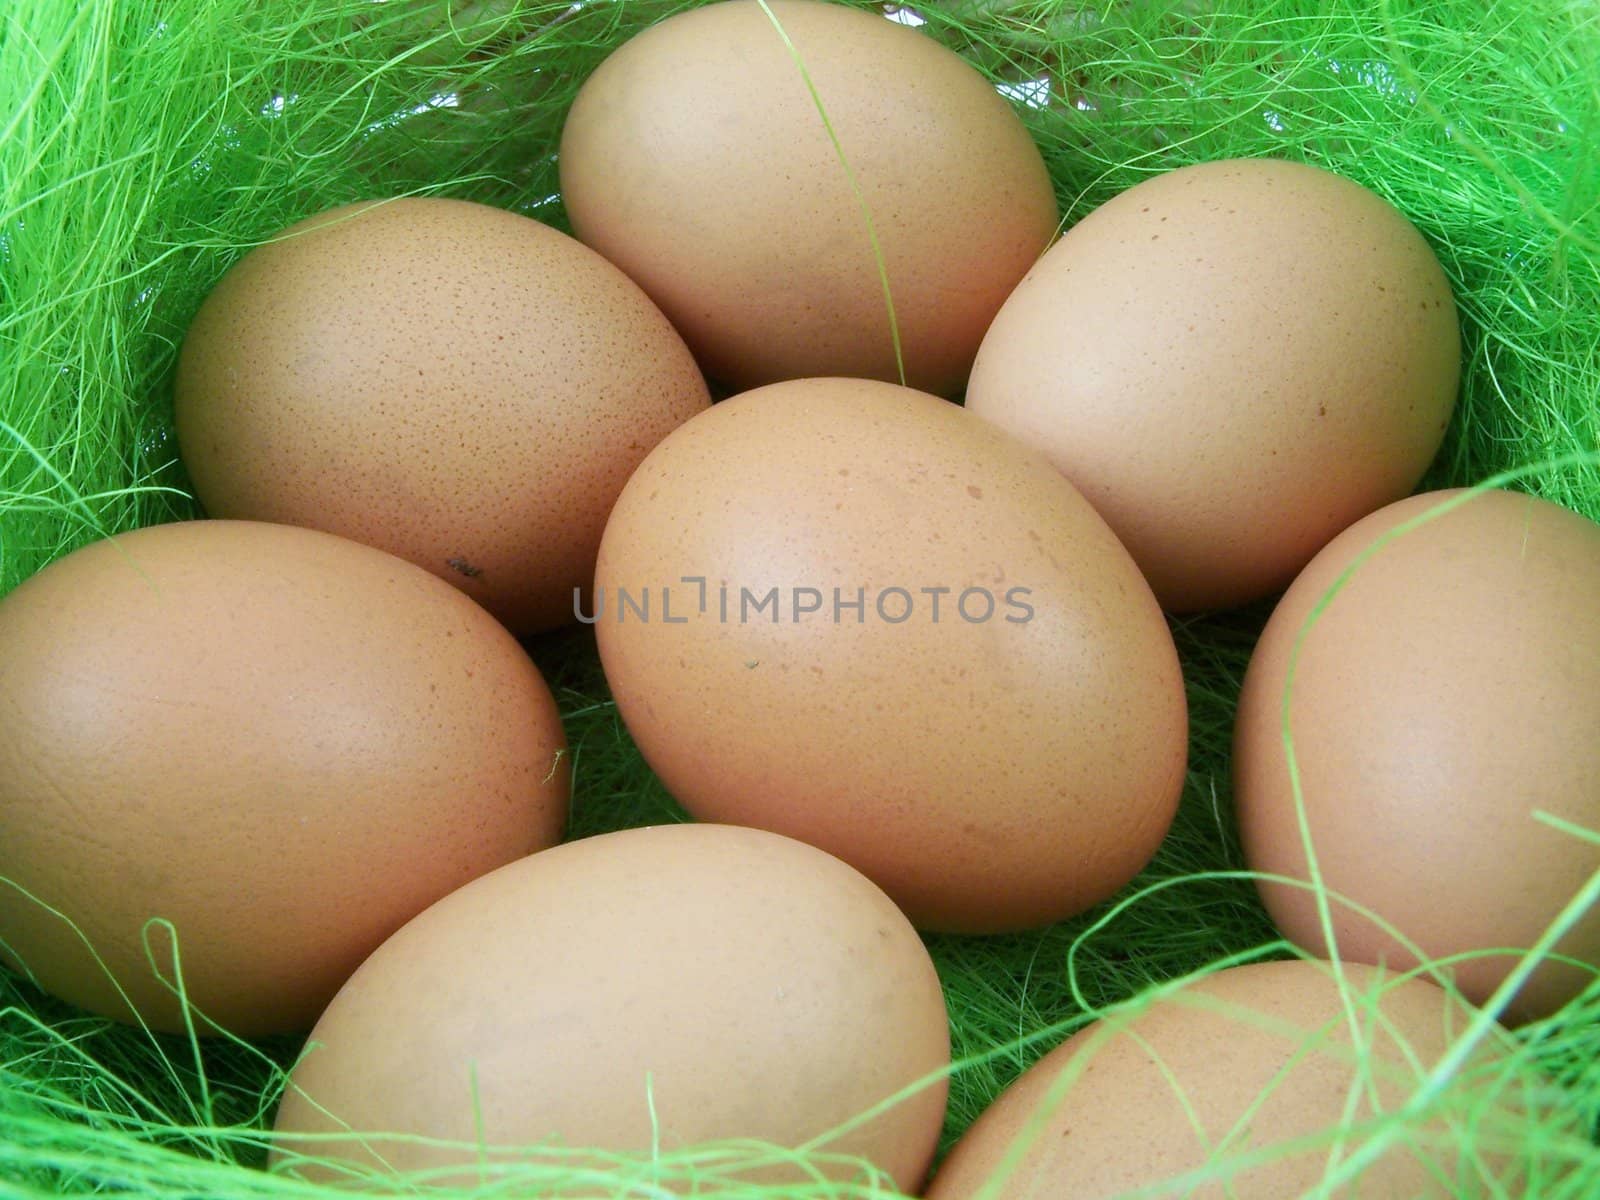 wicker basket with eggs by alexwhite